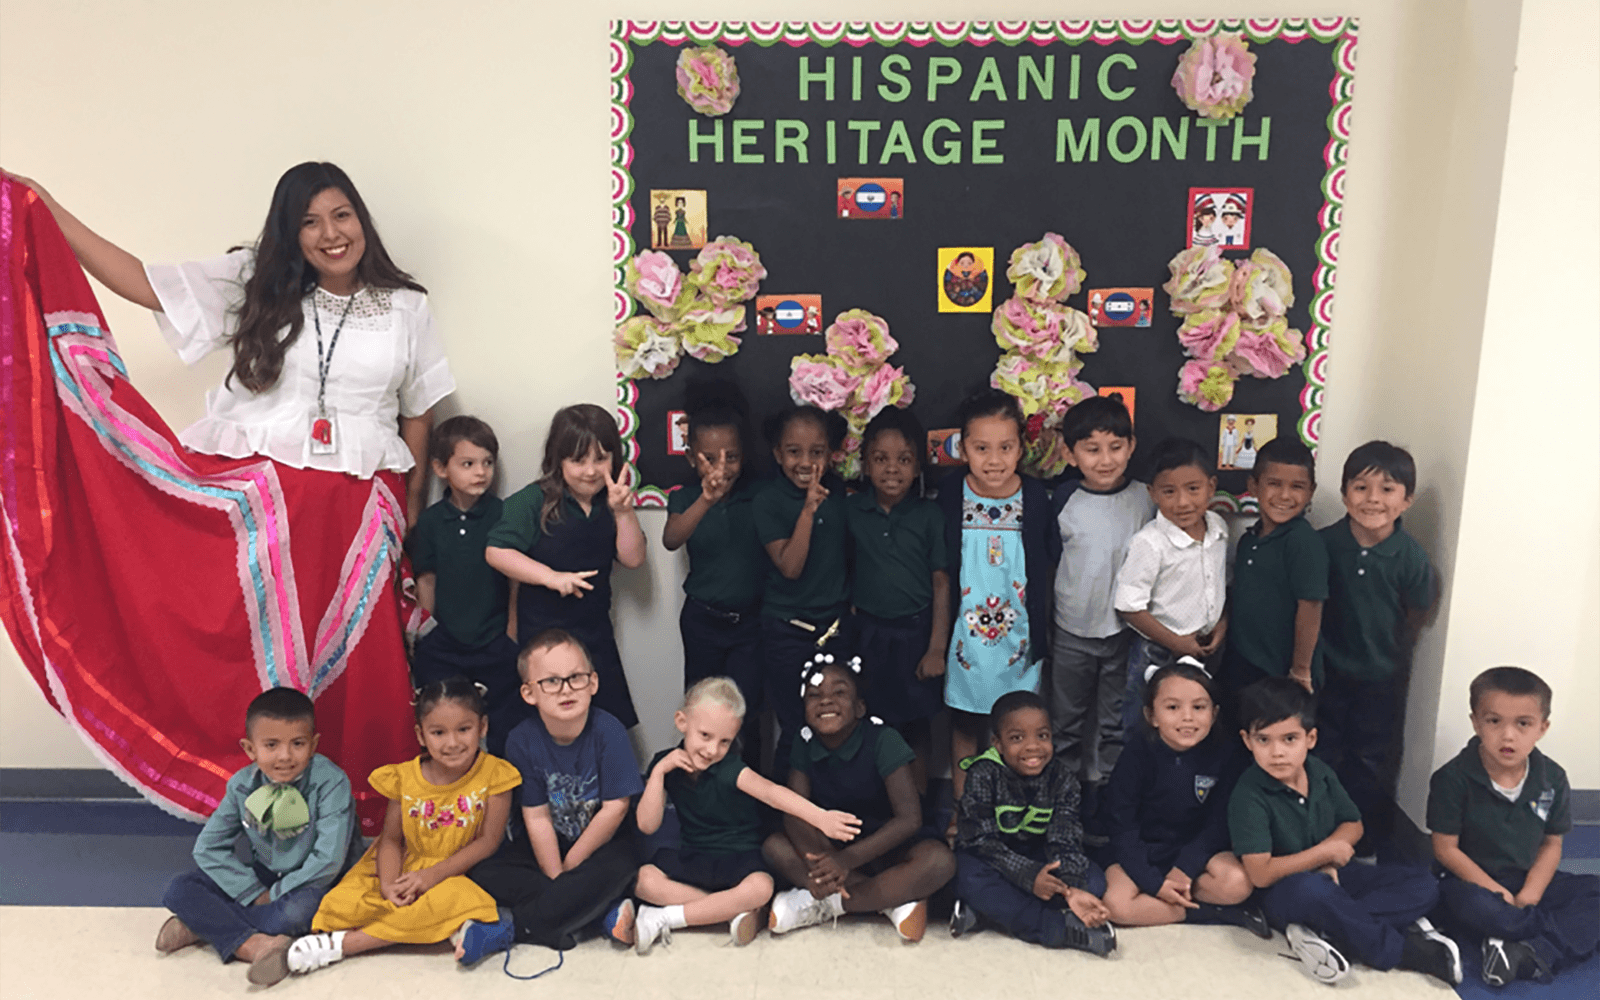 Teacher with students celebrating Hispanic Heritage Month